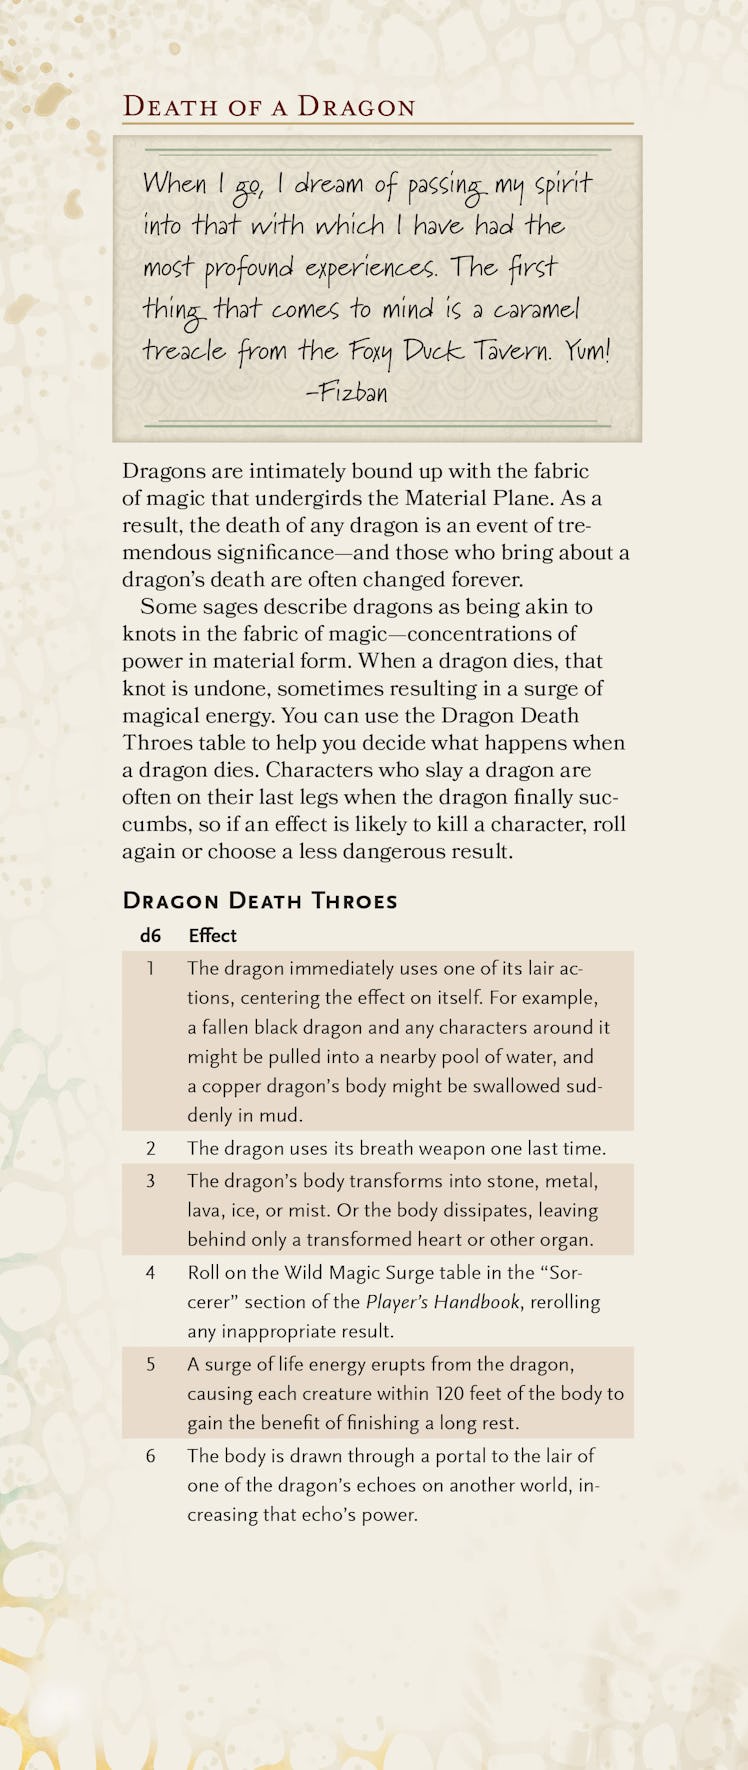 dnd fizbans treasury of dragons death of a dragon